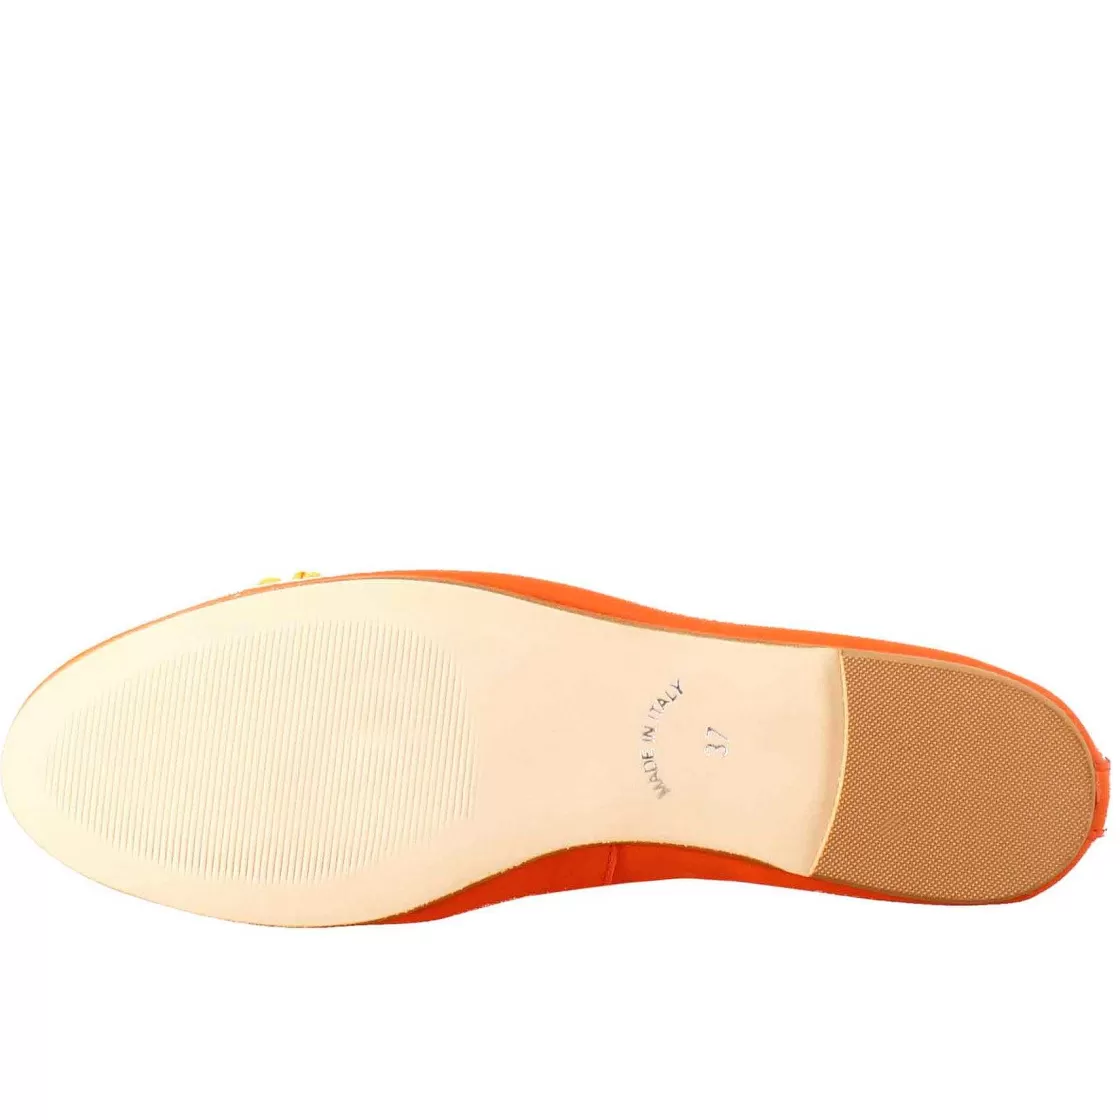 Leonardo Light Women'S Orange Flats Shoes In Smooth Leather Sale